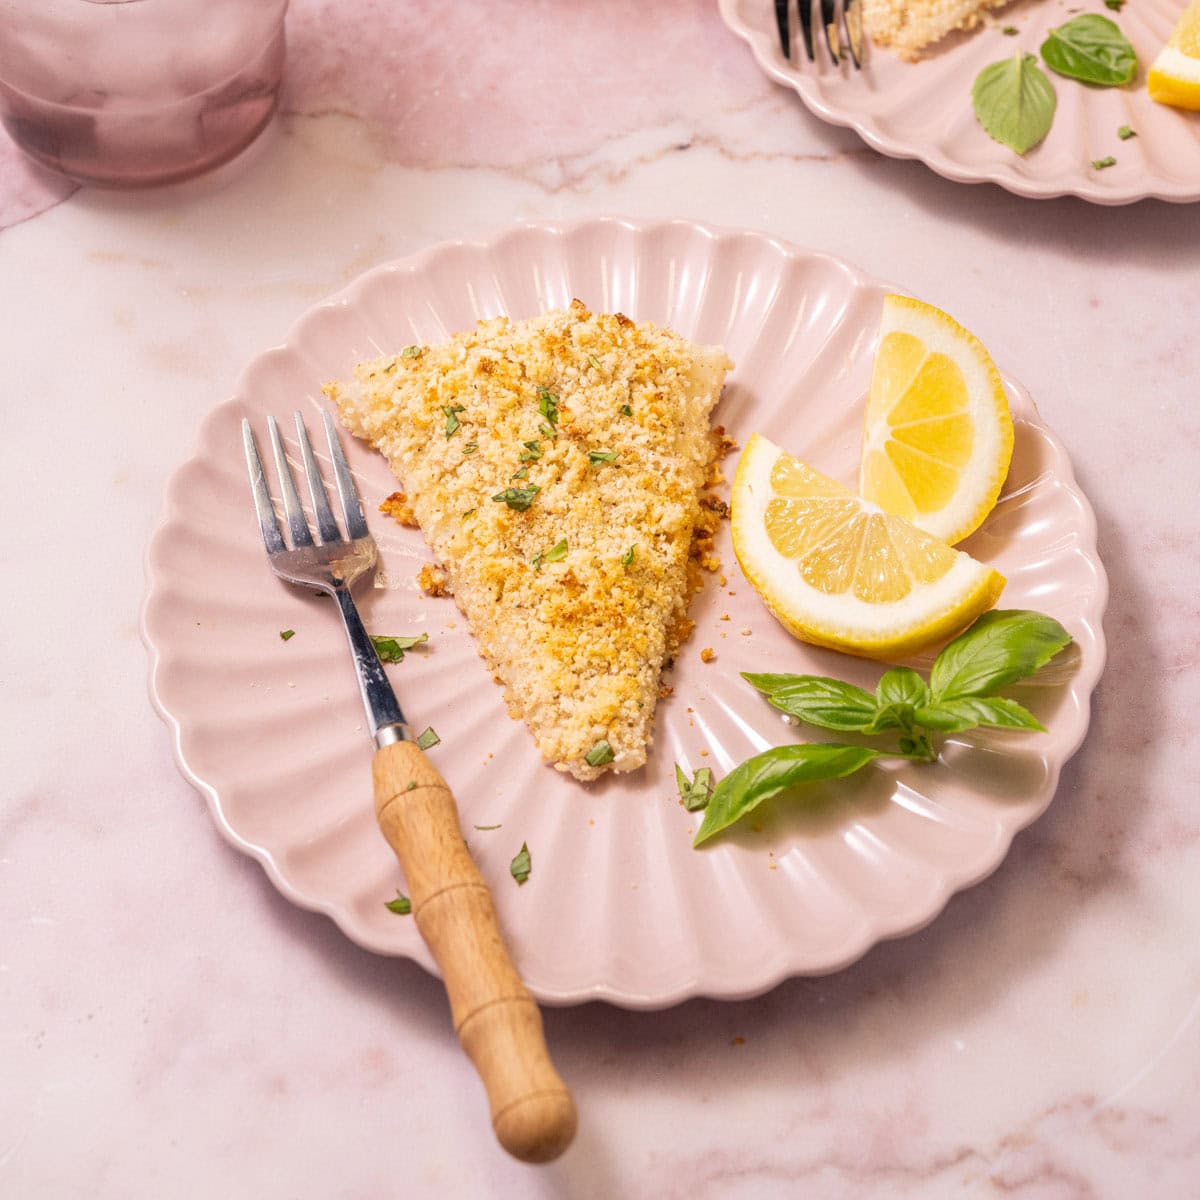 Crispy cod with panko crust served with lemon wedges.